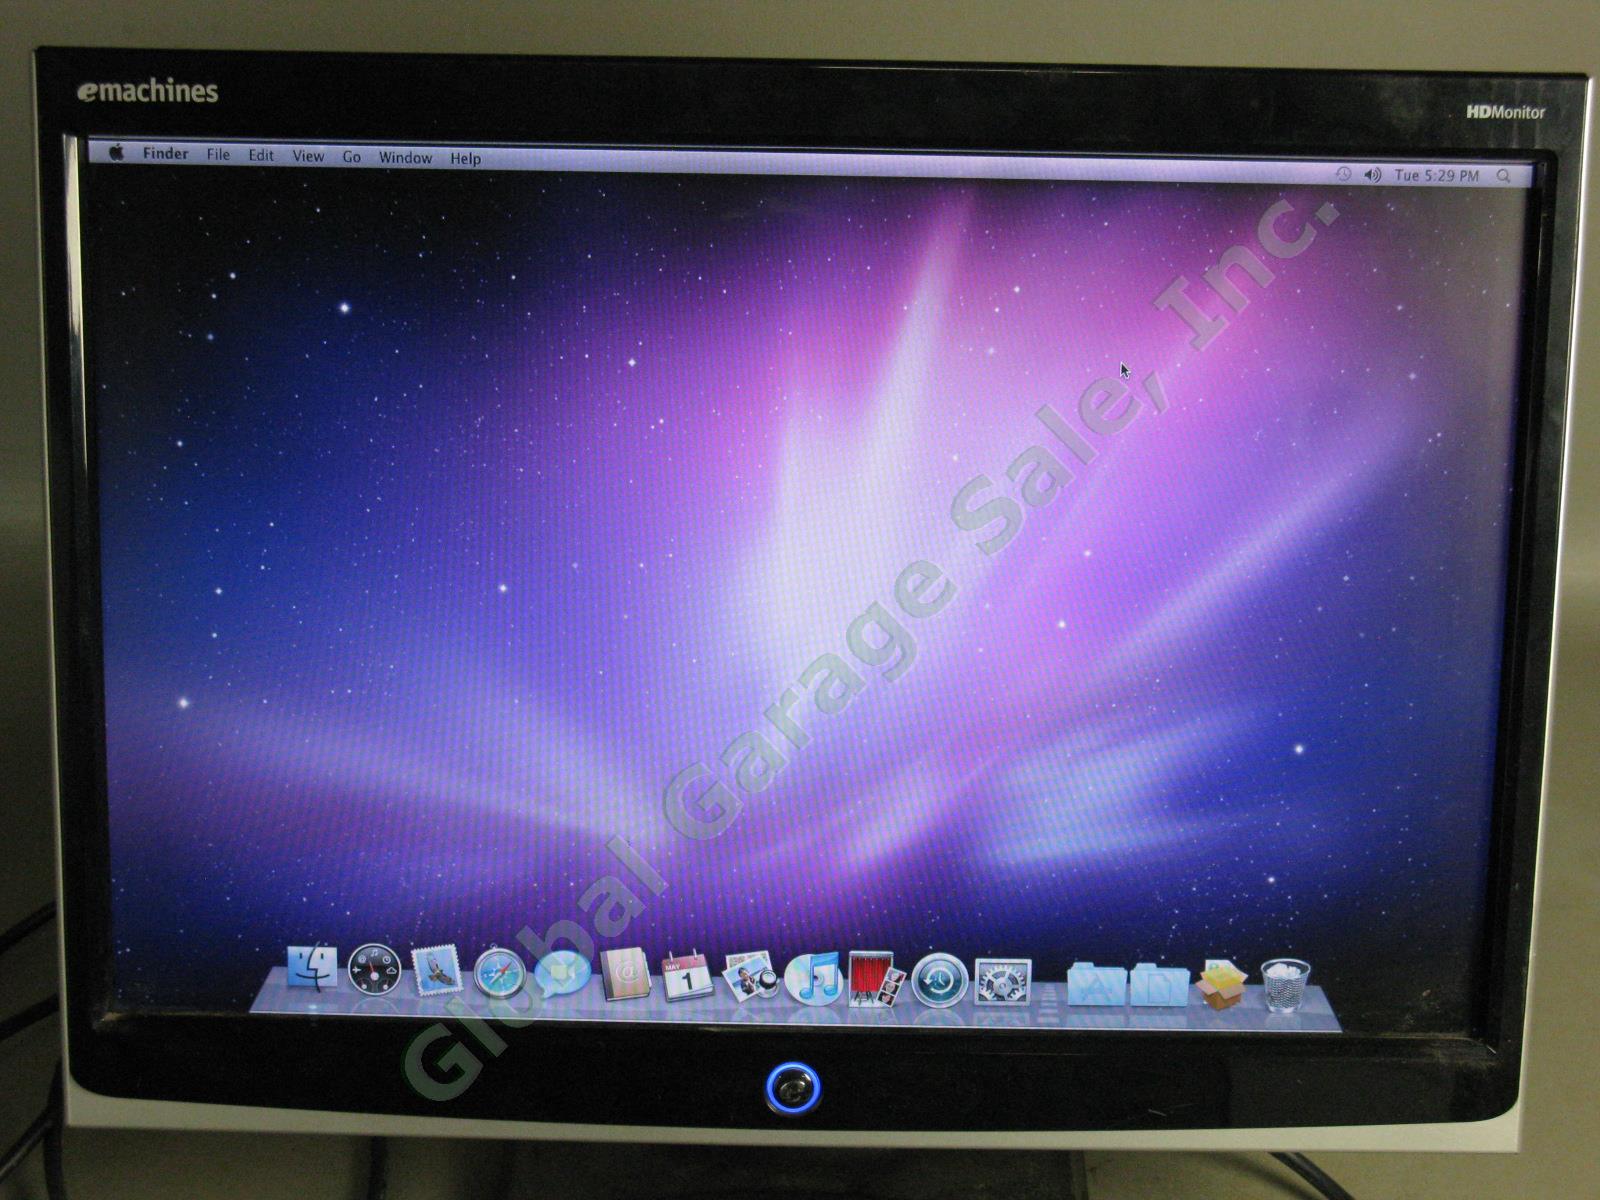 Apple Mac Pro A1186 Desktop Computer 7GB RAM 160GB HDD 2GHz Dual Core Xeon 10.6